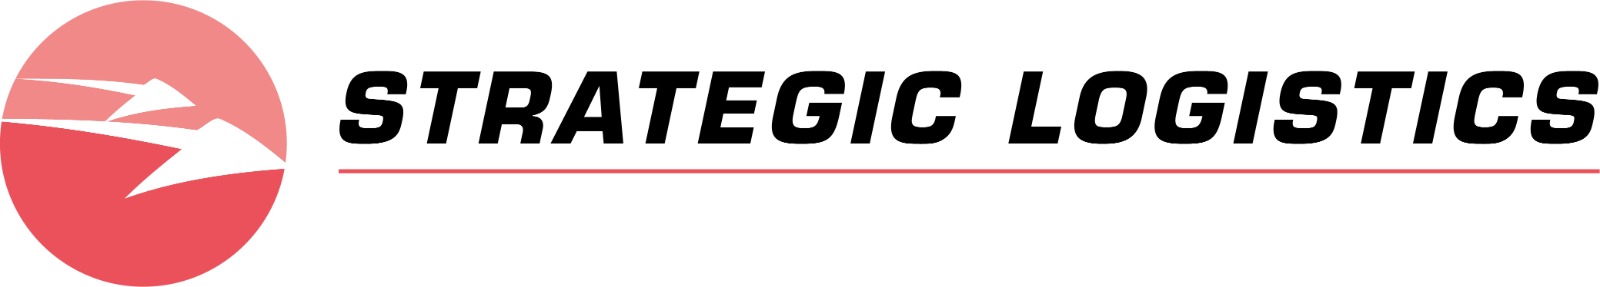 Strategic Logistics  logo